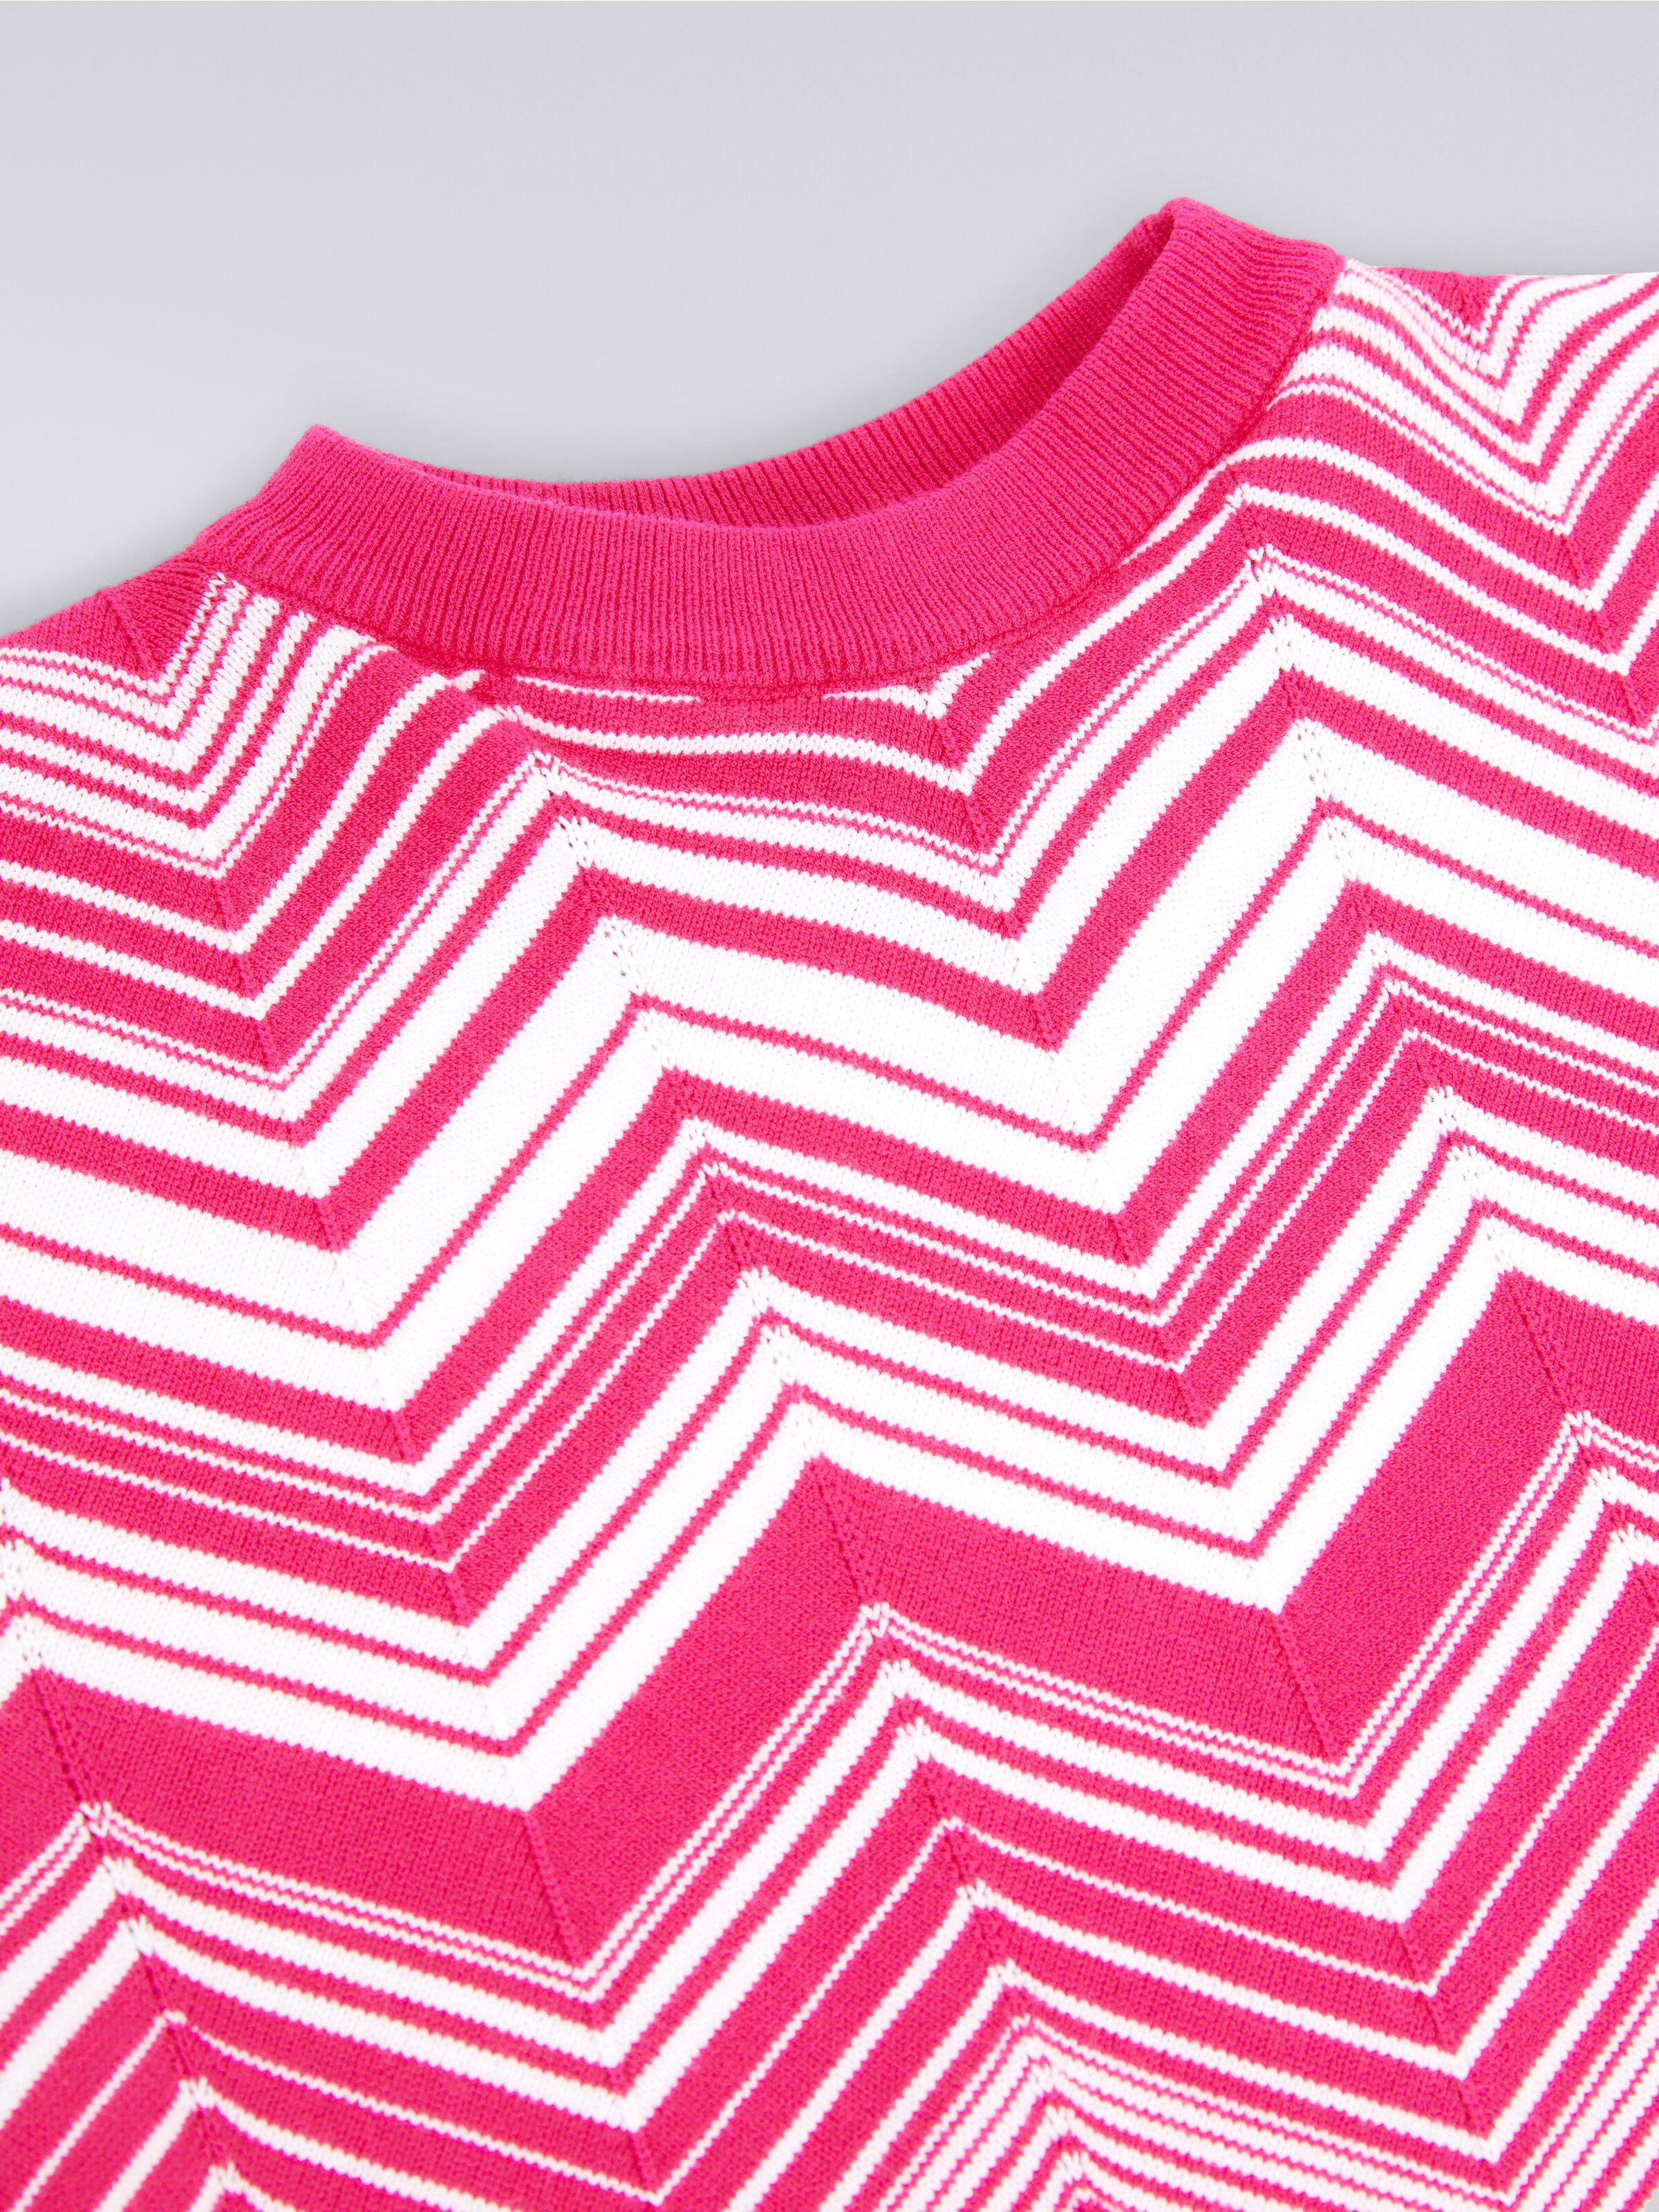 Viscose blend sweater, Pink   - 2